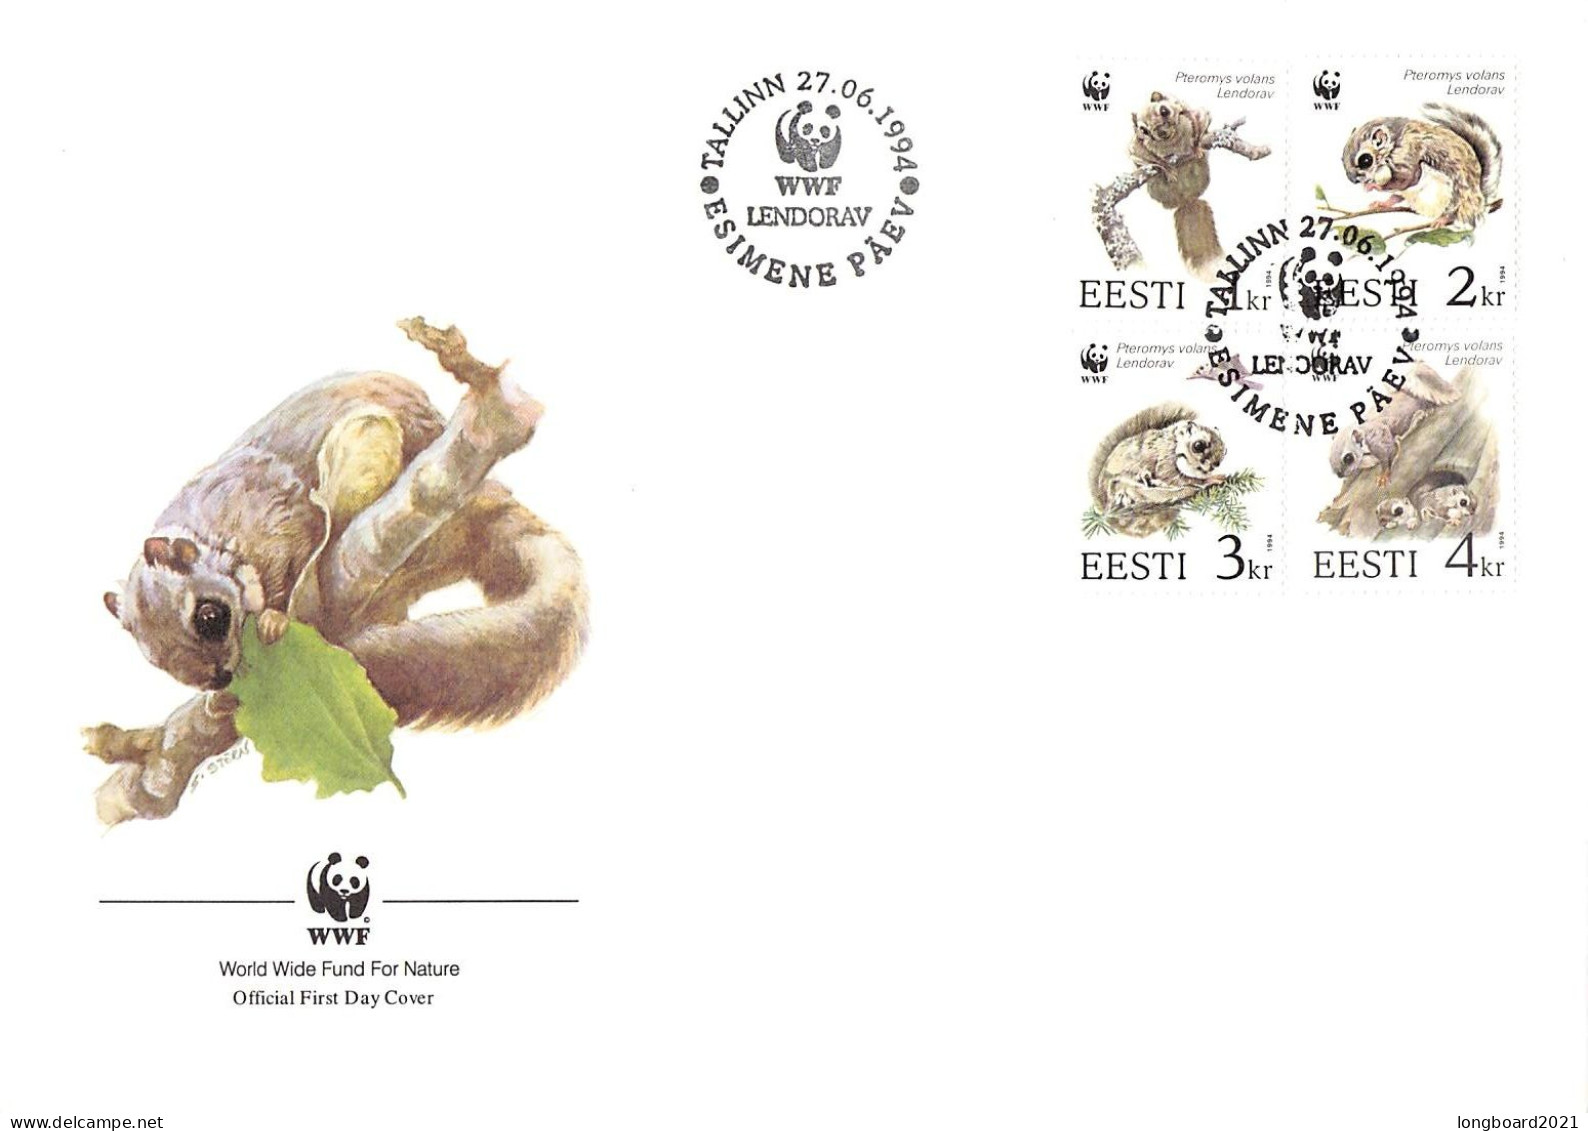 ESTONIA - FDC WWF 1994 - SQUIRREL / 4245 - Estland